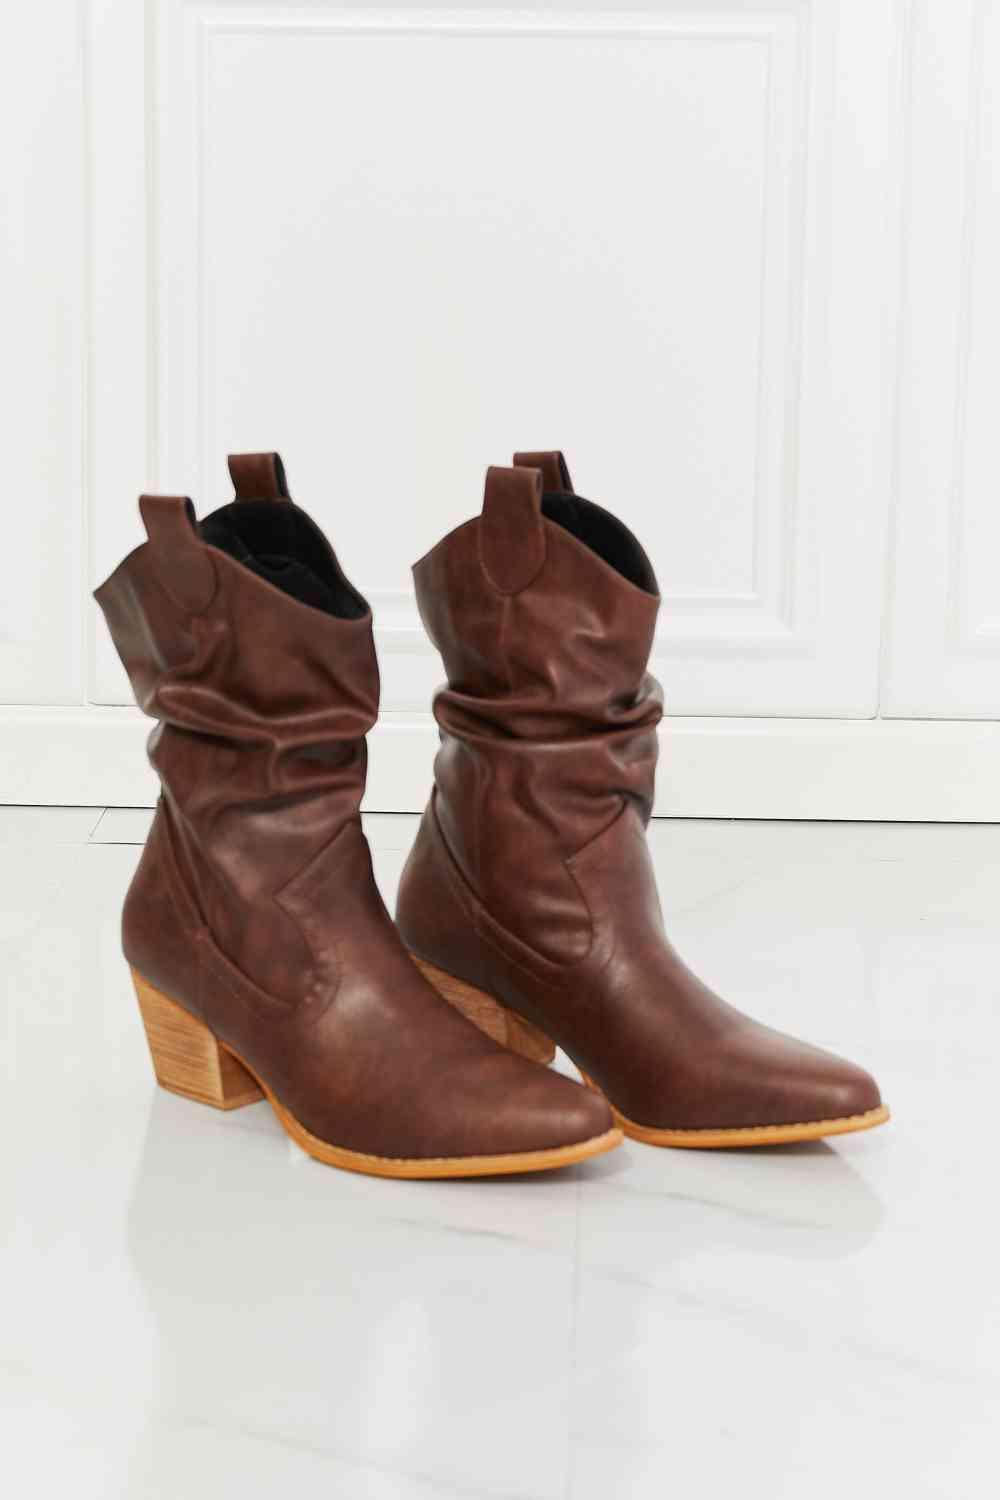 MMShoes Better in Texas Scrunch Cowboy Boots in Brown - Bona Fide Fashion